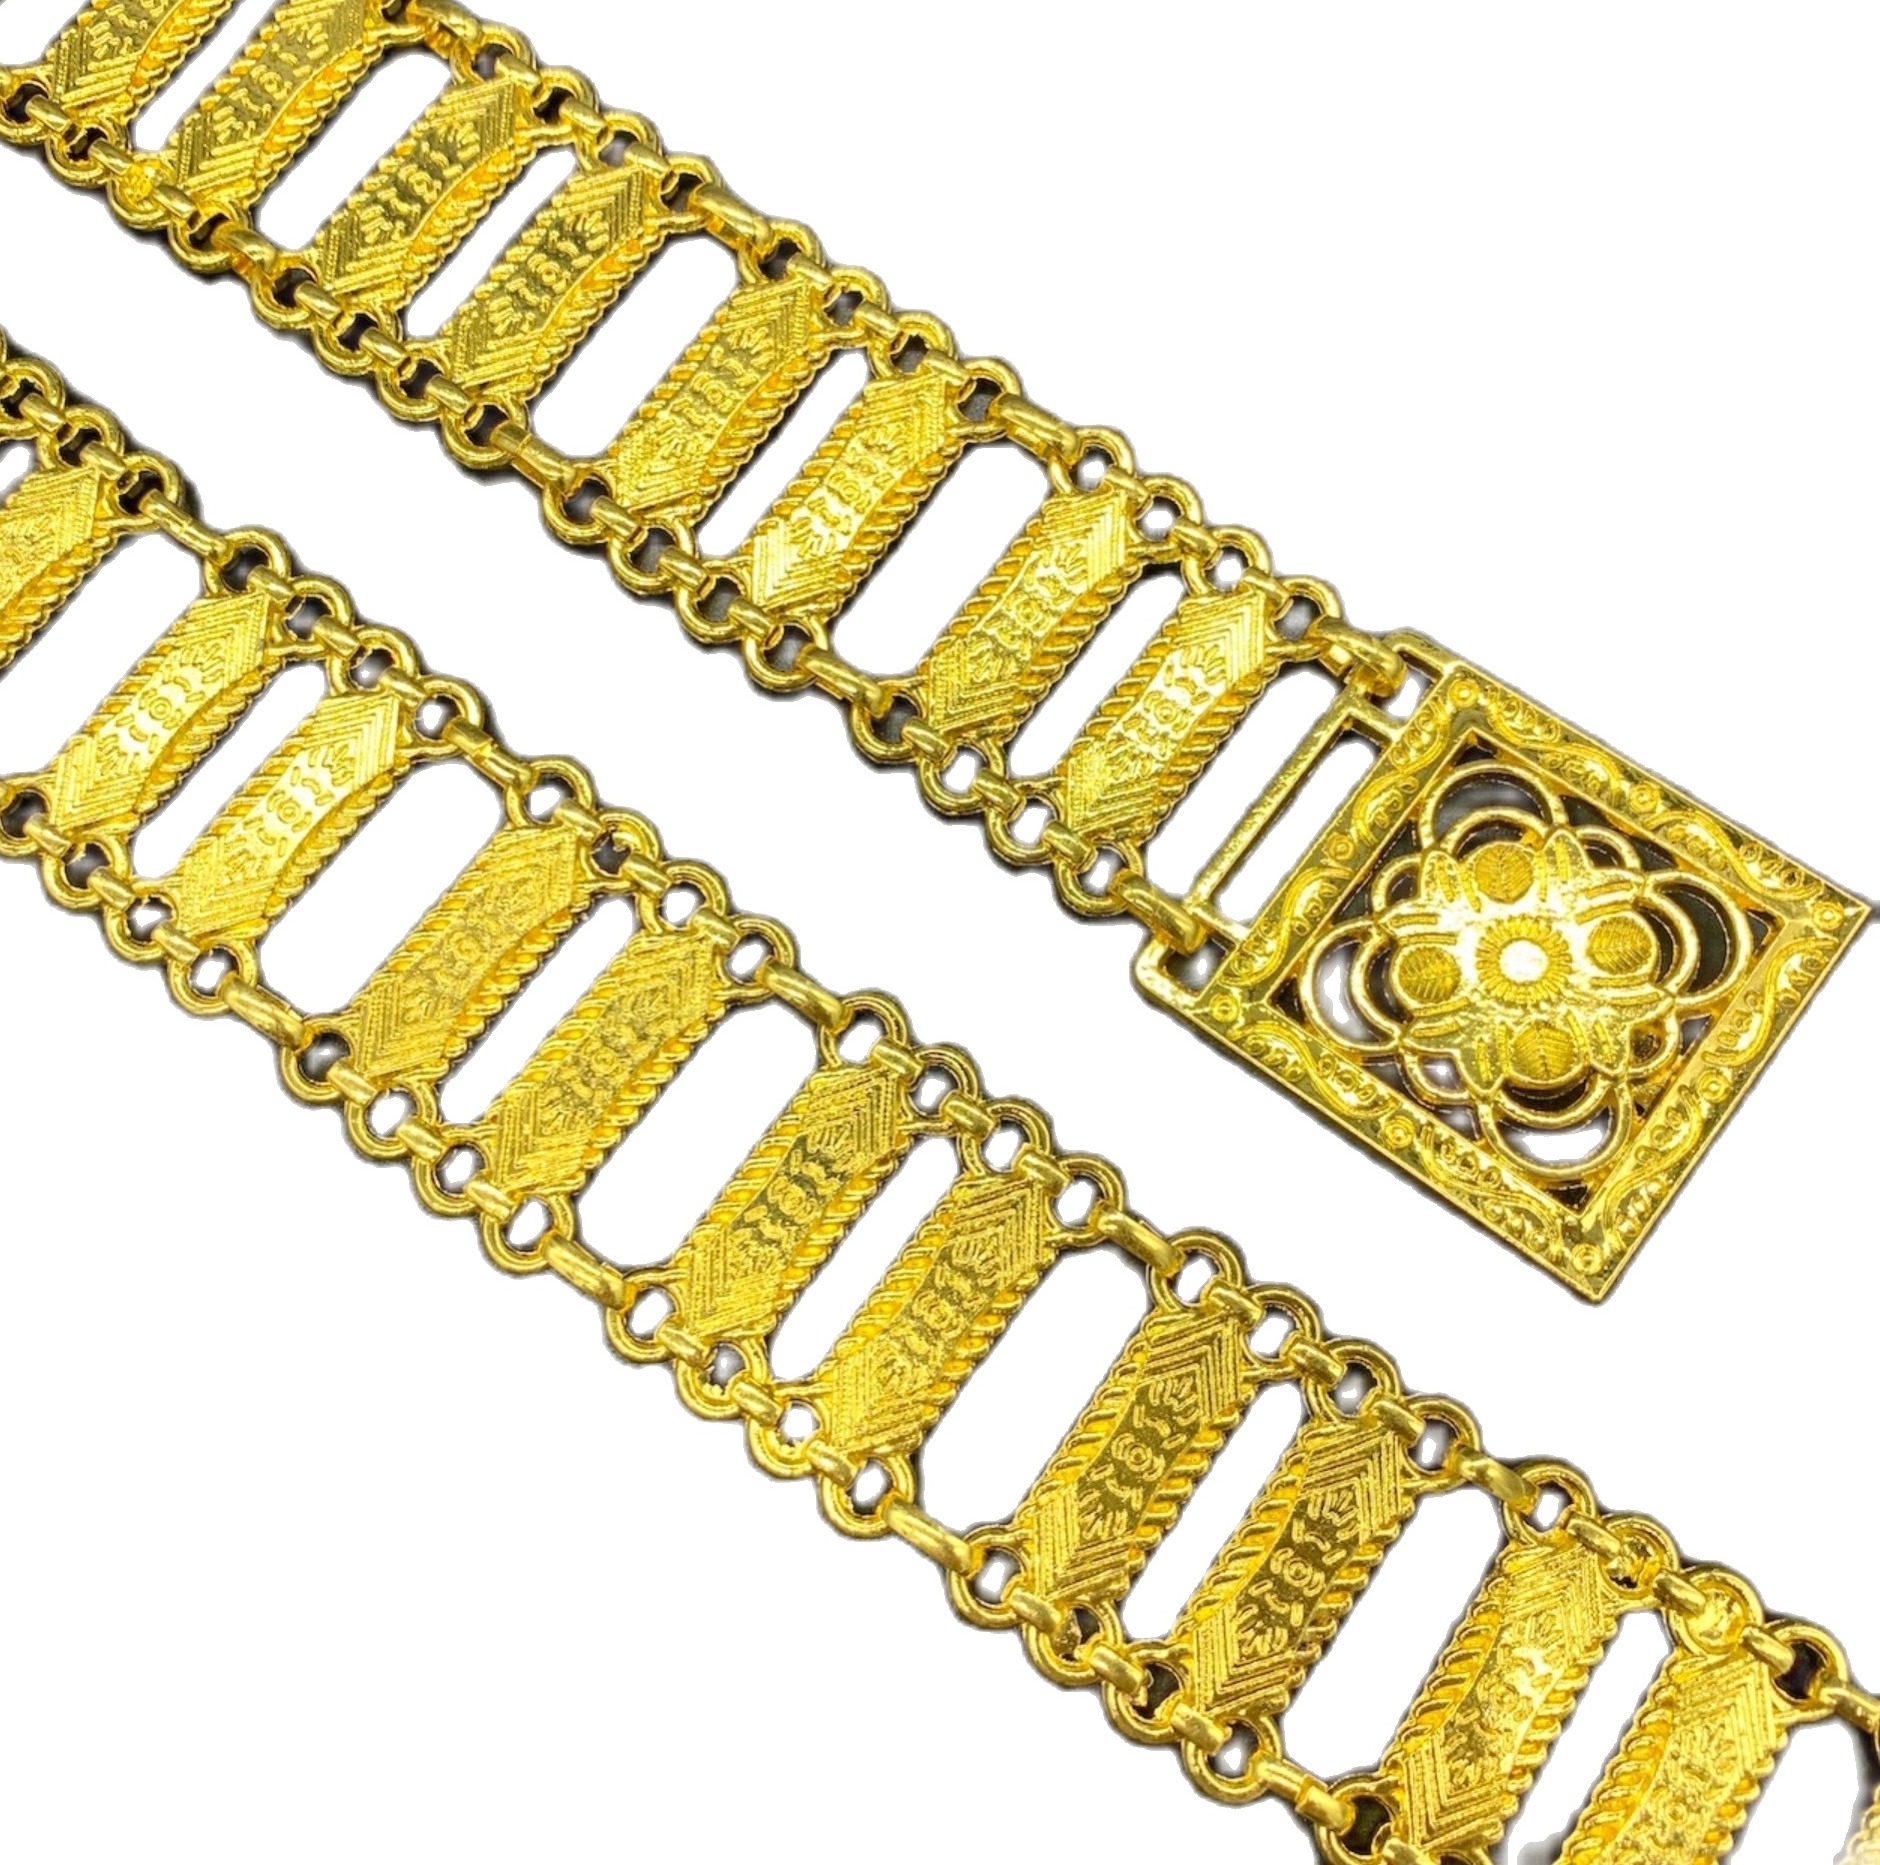 Vintage jewelry เข็มขัด อีสานชุดล้านนาไทหัวเข็มขัดสีทอง